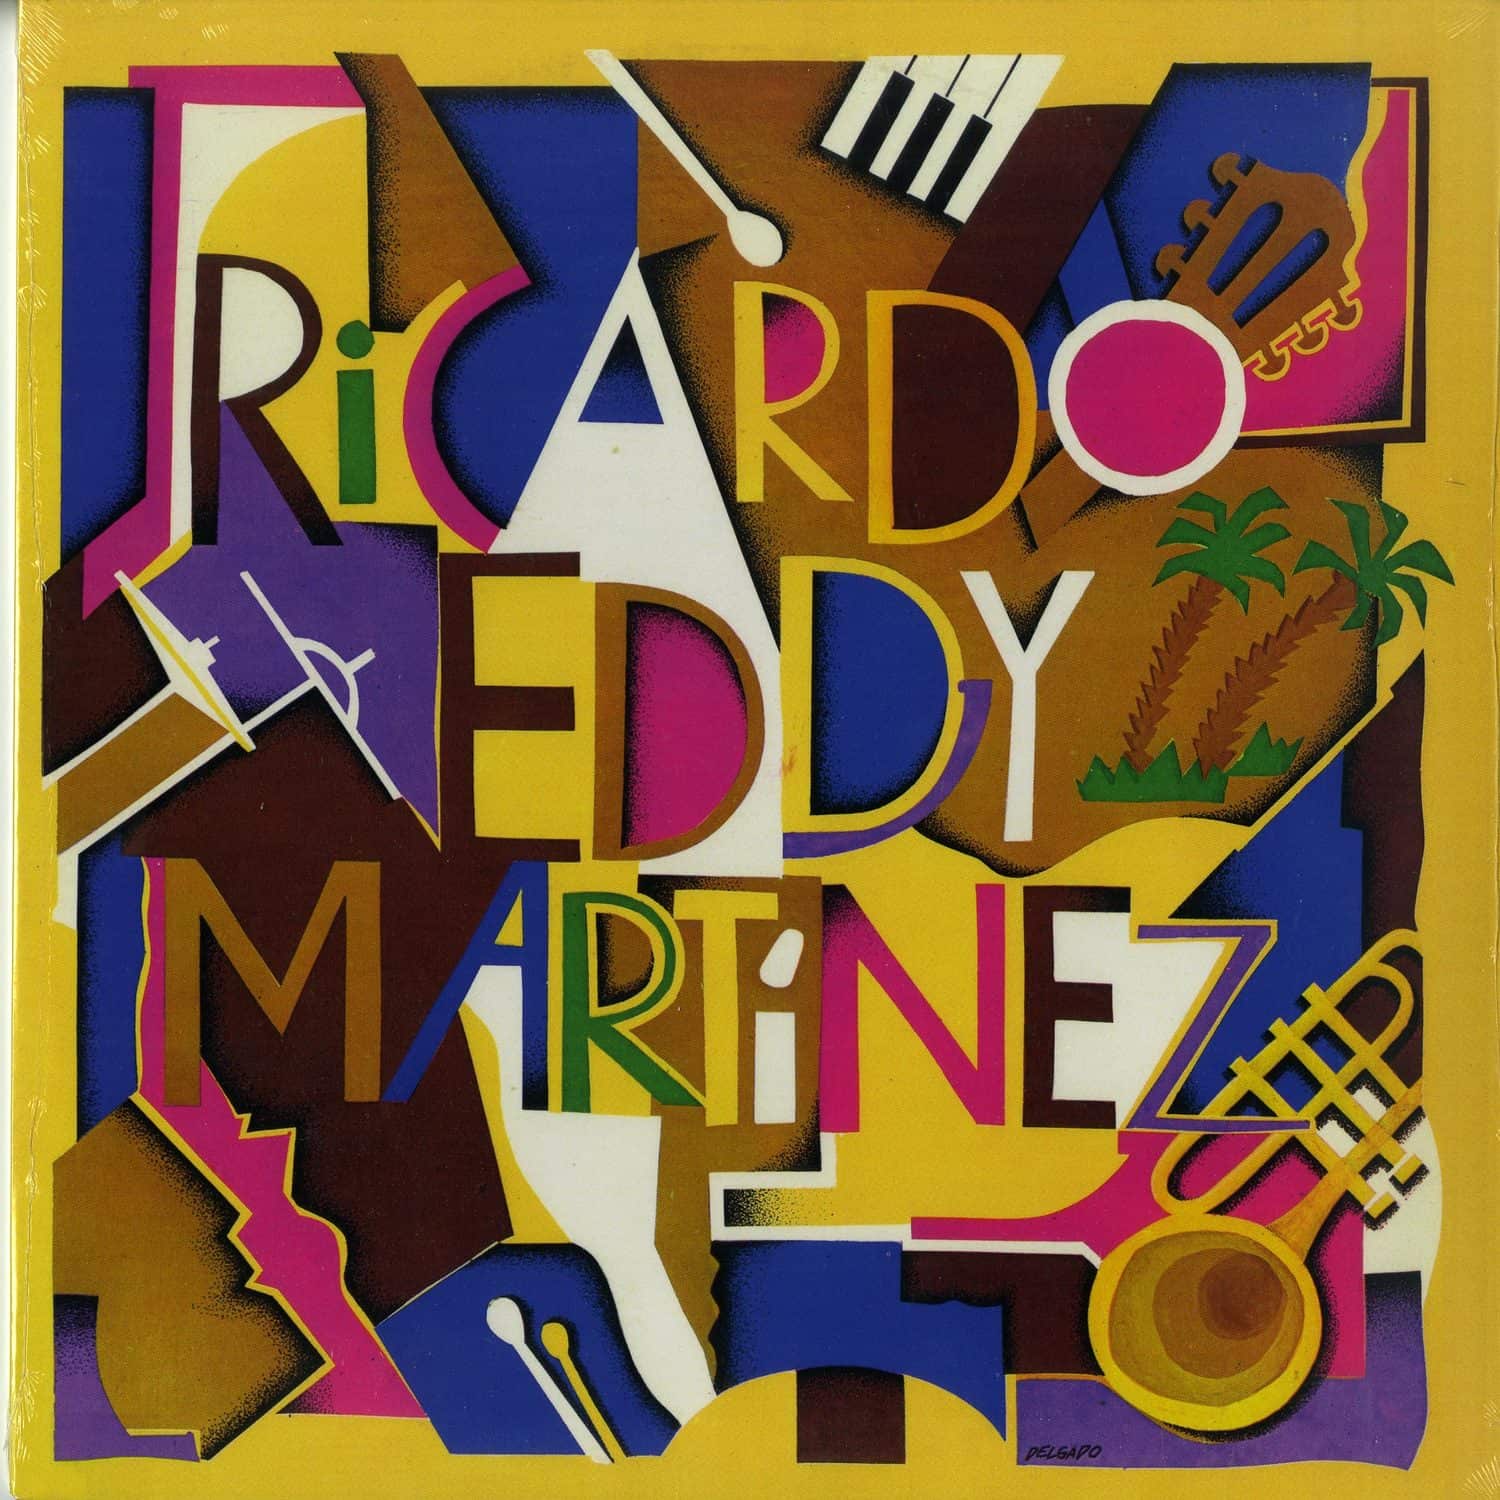 Ricardo Eddy Martinez - EXPRESO RITMICO 